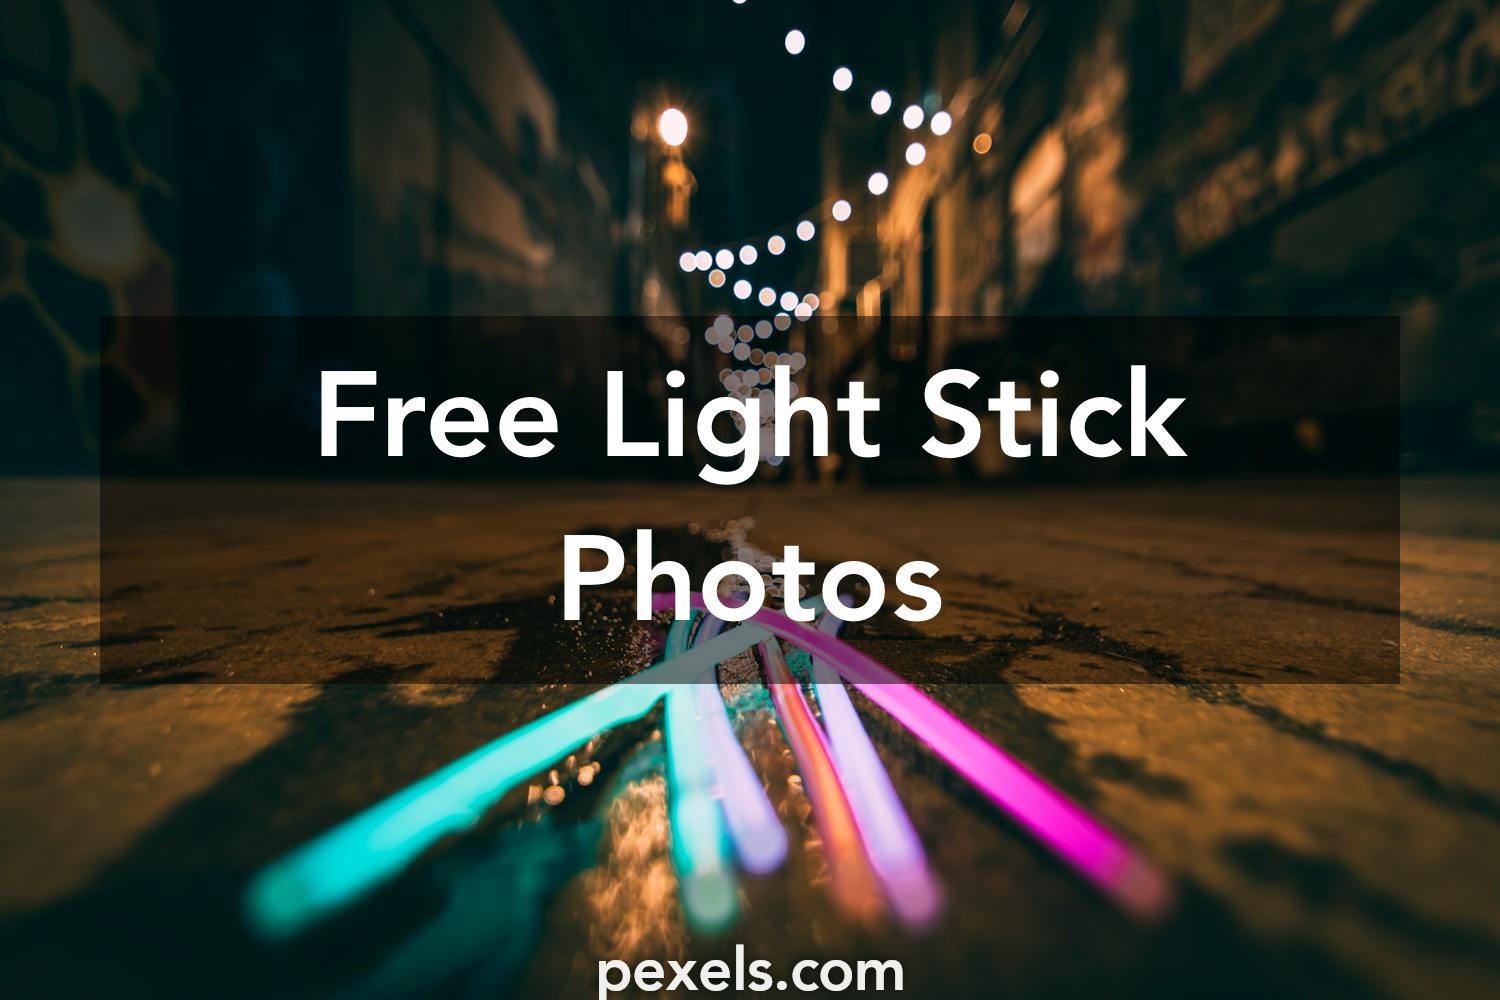 1000+ Interesting Light Stick Photos · Pexels · Free Stock Photos